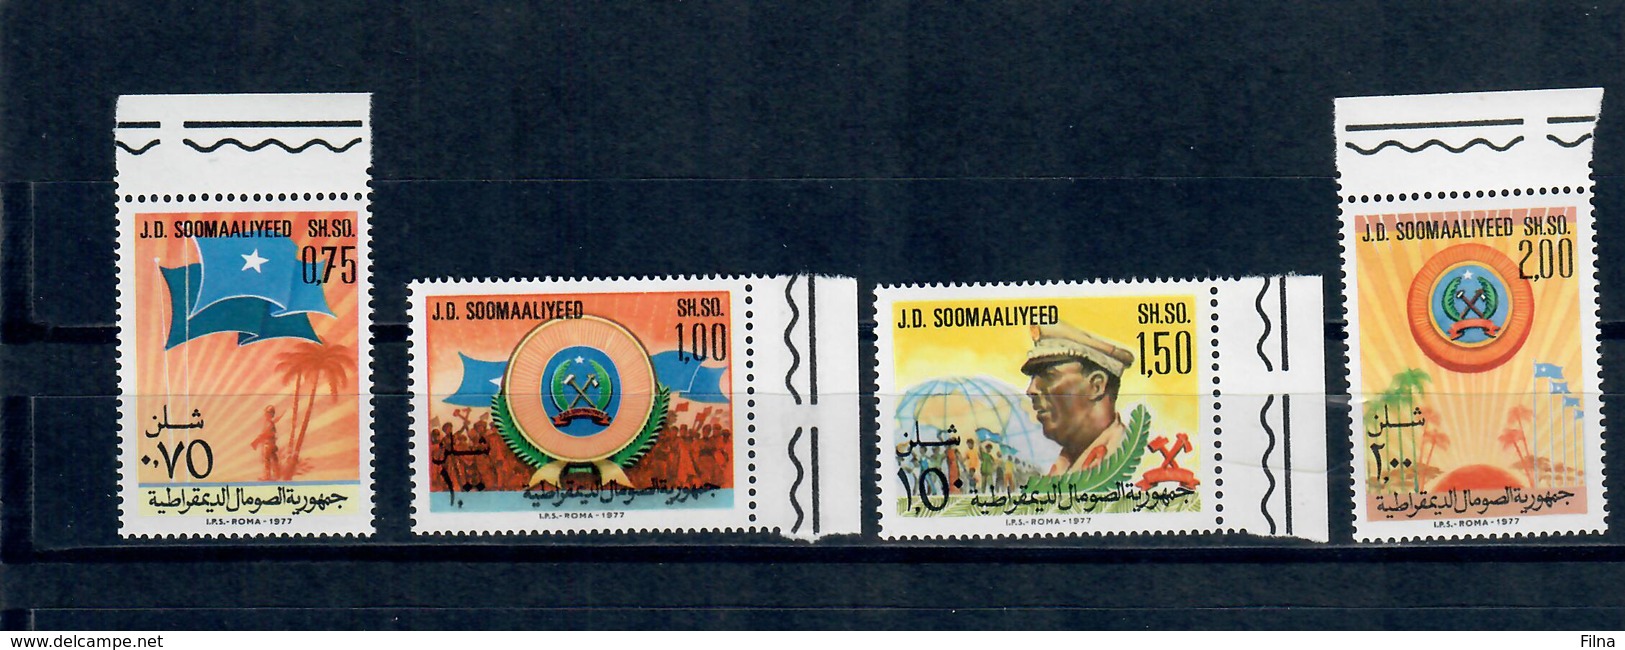 SOMALIA 1977 - 1 ANNO RIVOLUZIONE  - MNH ** - Somalia (1960-...)